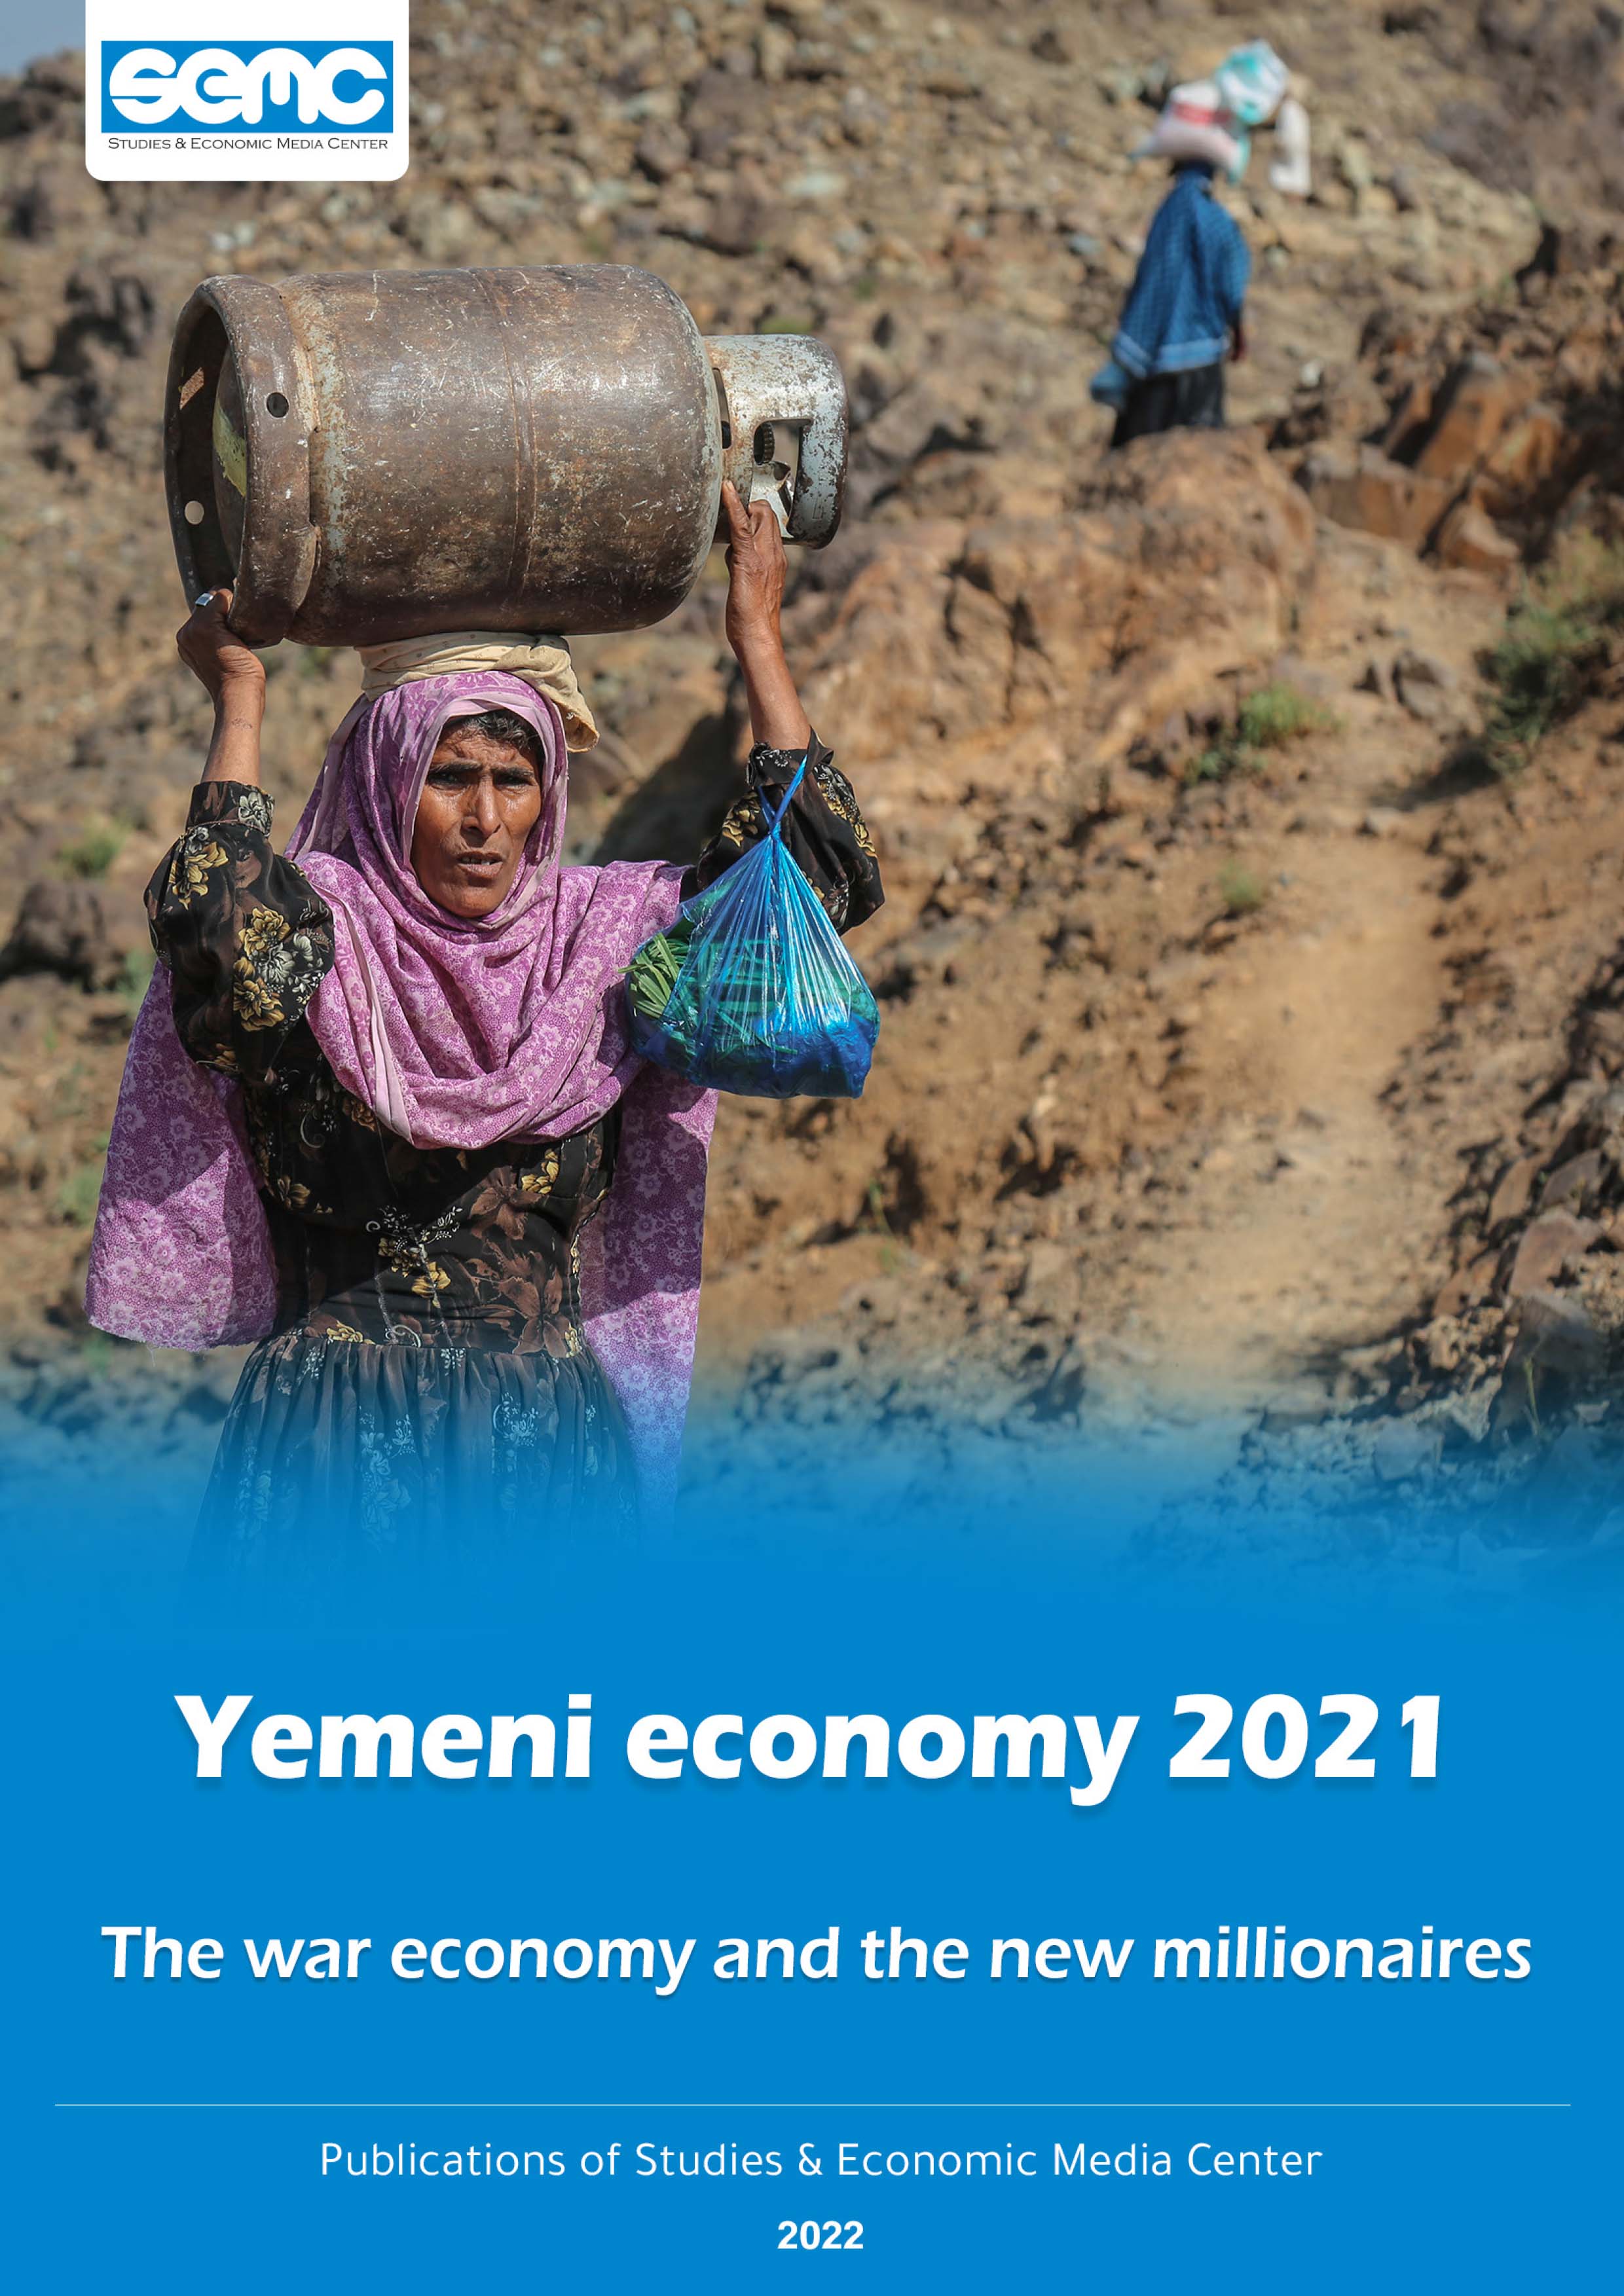 Yemenief An economic report on the war economy and new millionaires